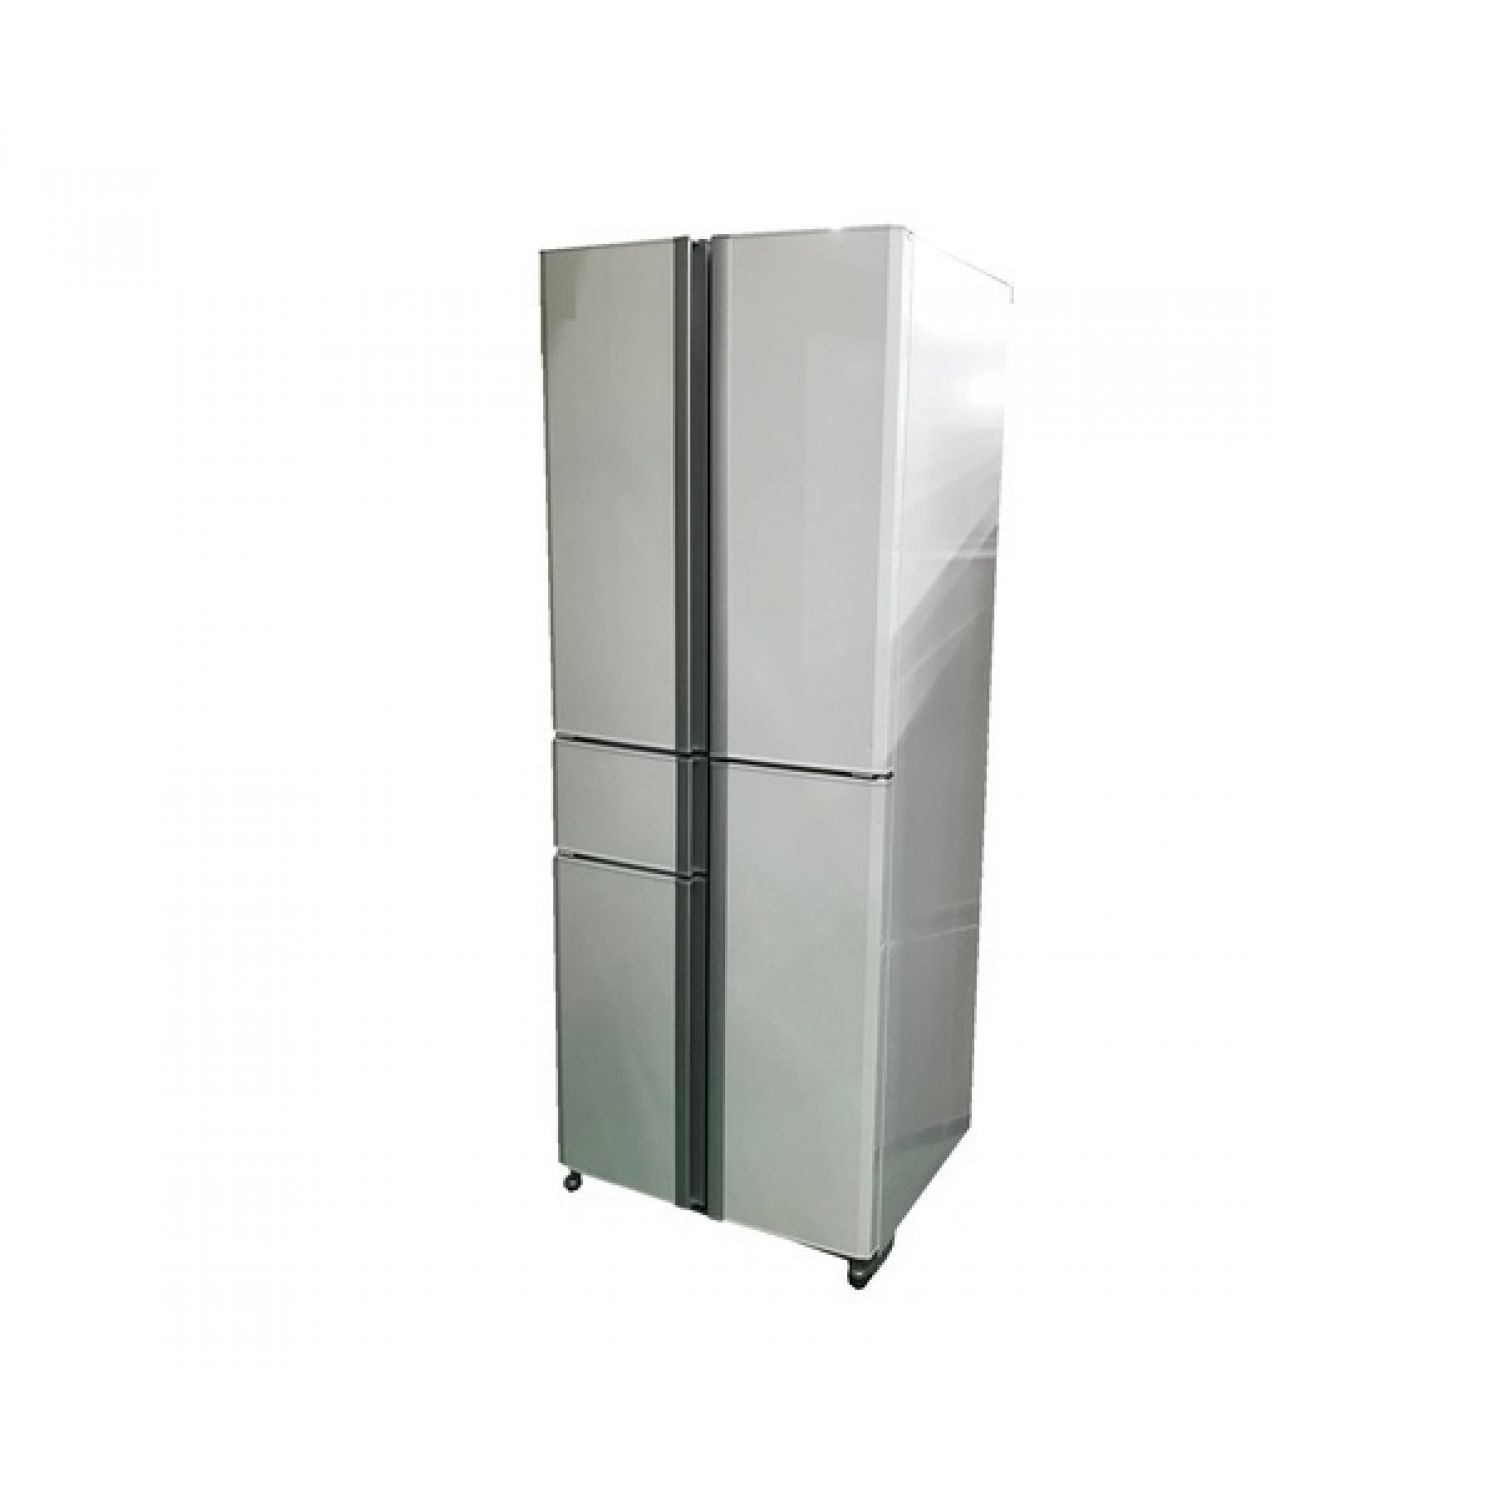 MITSUBISHI 冷凍冷蔵庫 MR-E57S-F3 565L 2011年製 ノンフロン フレンチ 